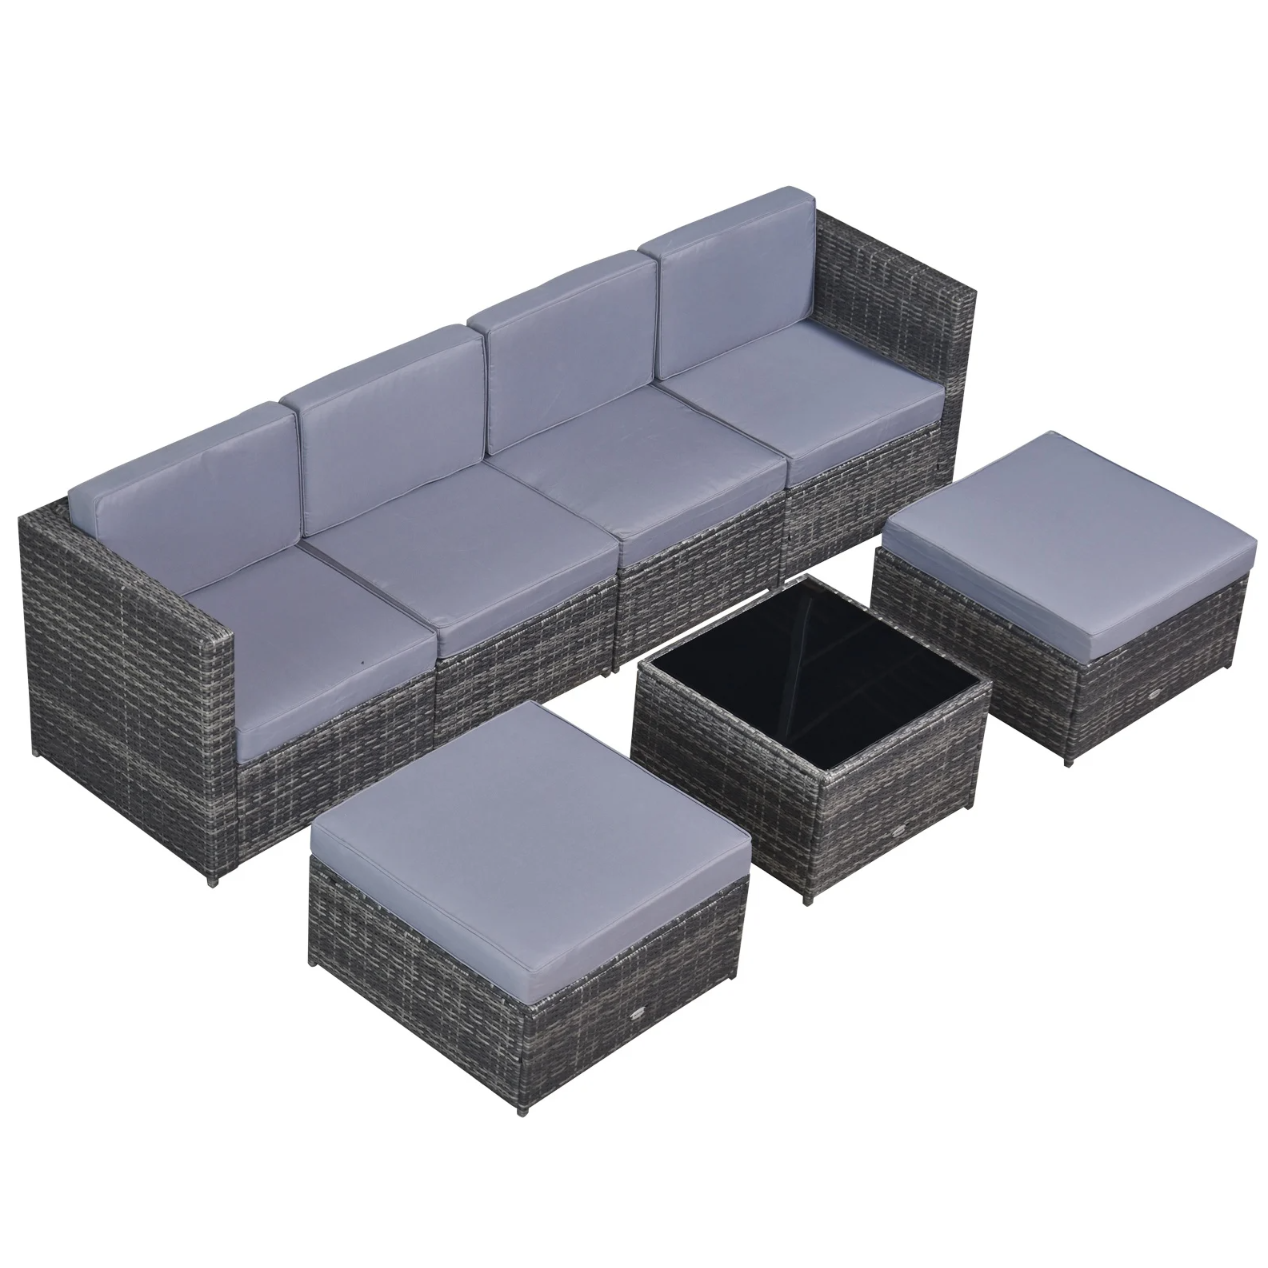 Nancy's Hutto Garden Set - Lounge Set - Garden Furniture - 7 Pieces - Seat Cushions - Table - Safety Glass - Polyrattan - Gray